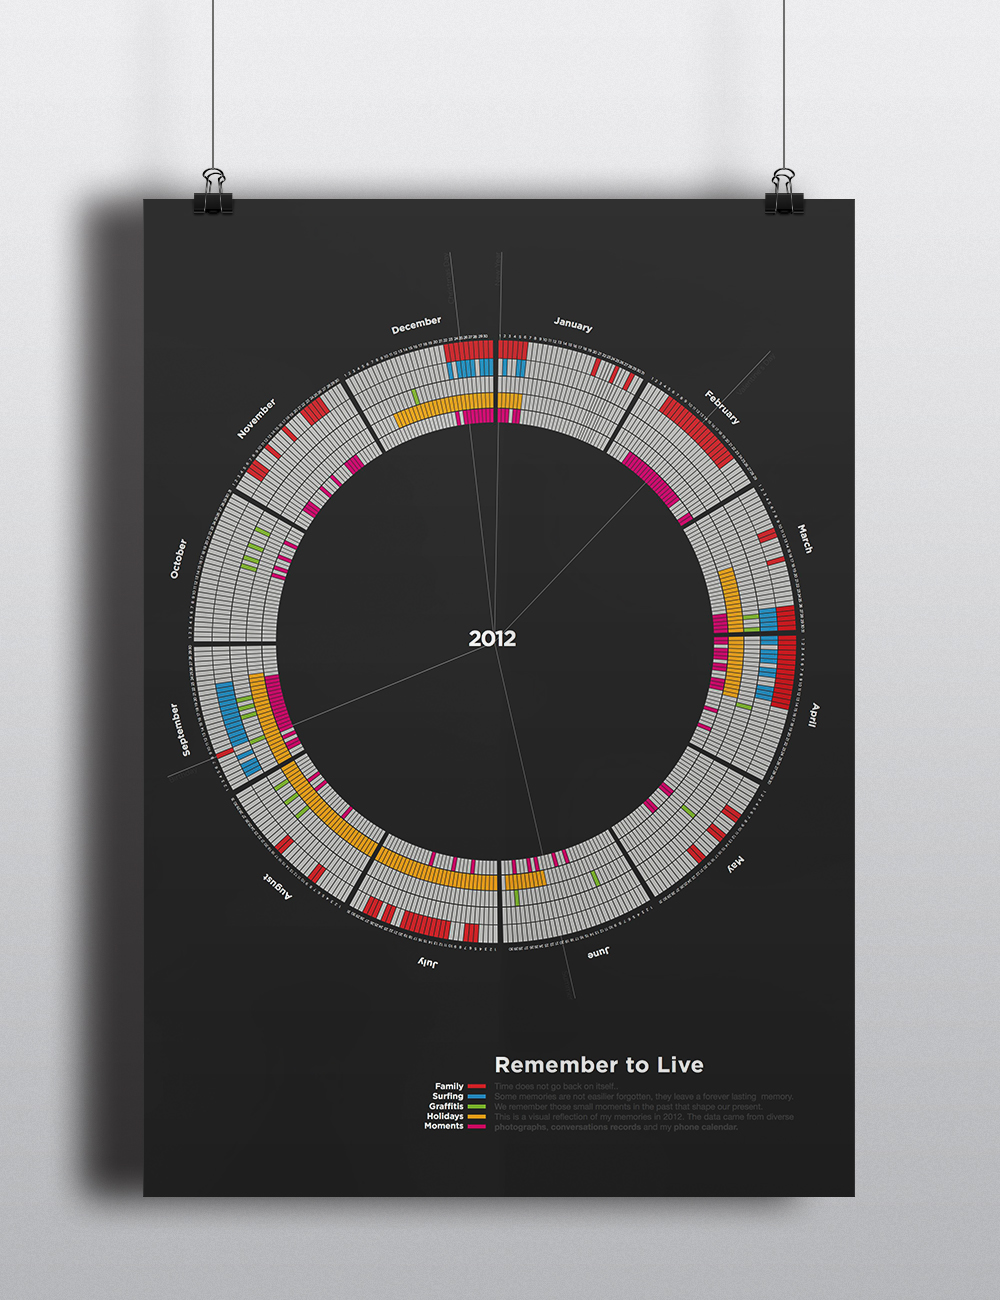 infographic data visualization calendar carlos palma LCC london college of communication personal Resume CV portfolio